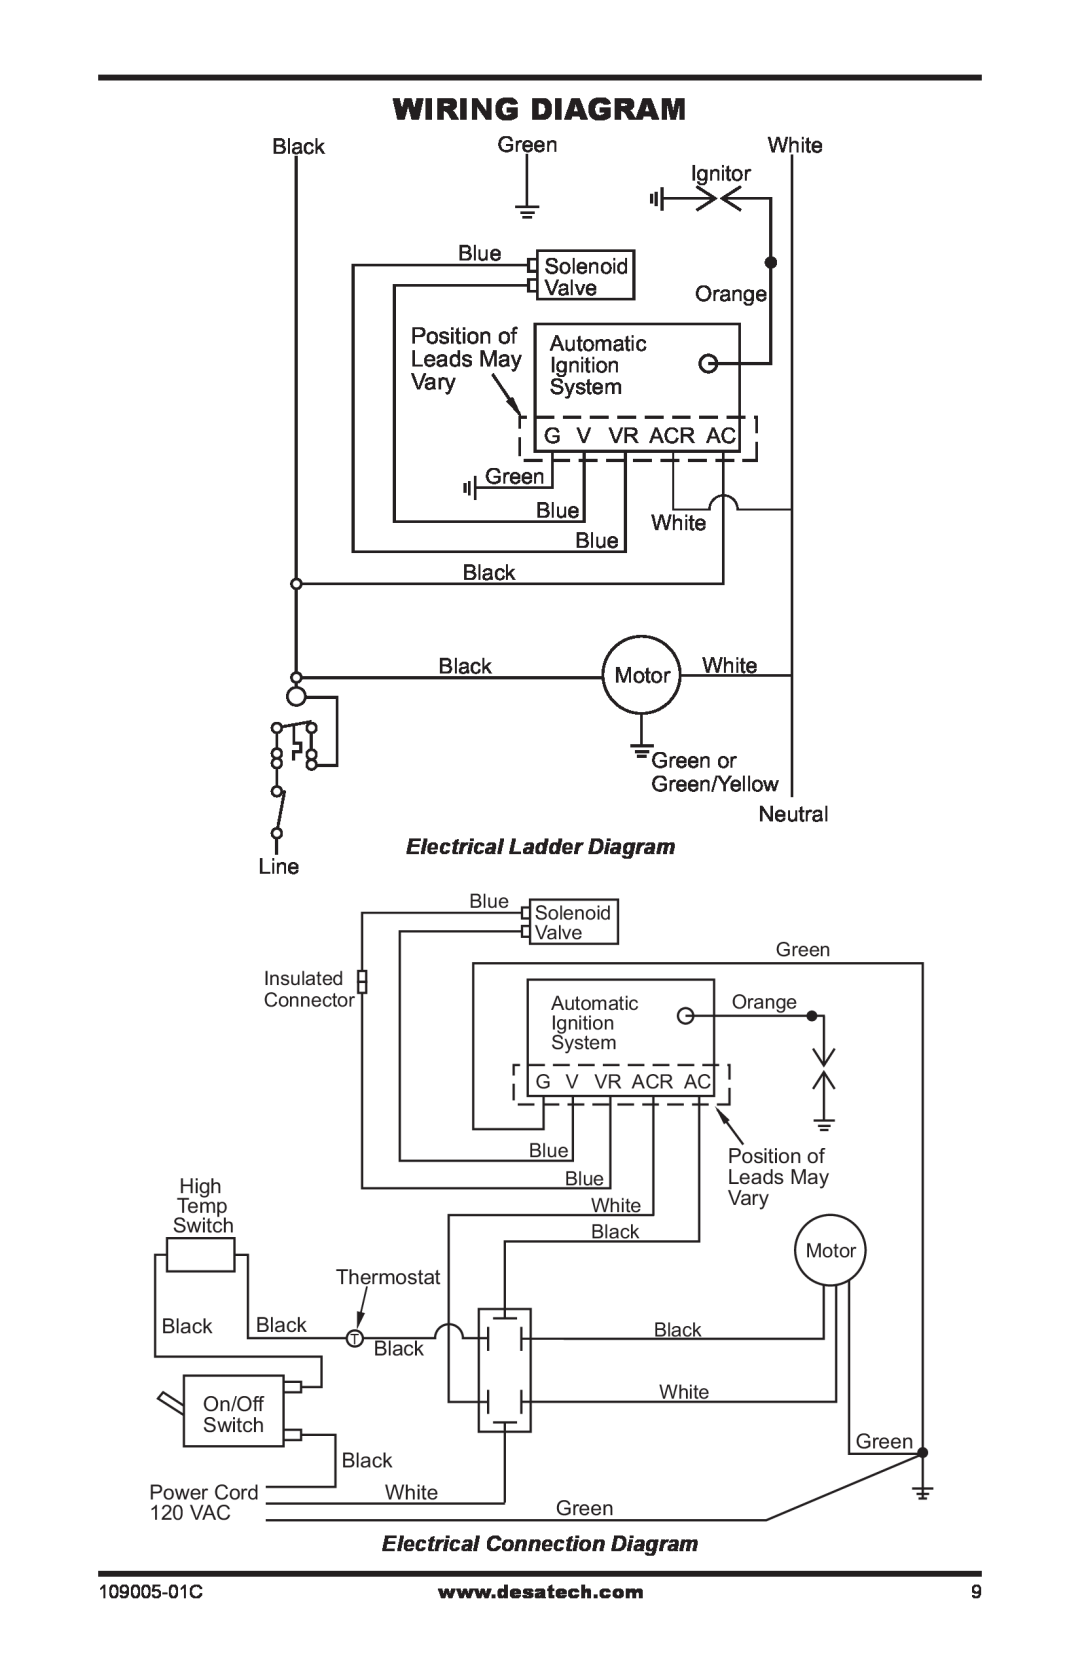 Desa RCLP155AT owner manual Wiring Diagram, Electrical Connection Diagram 